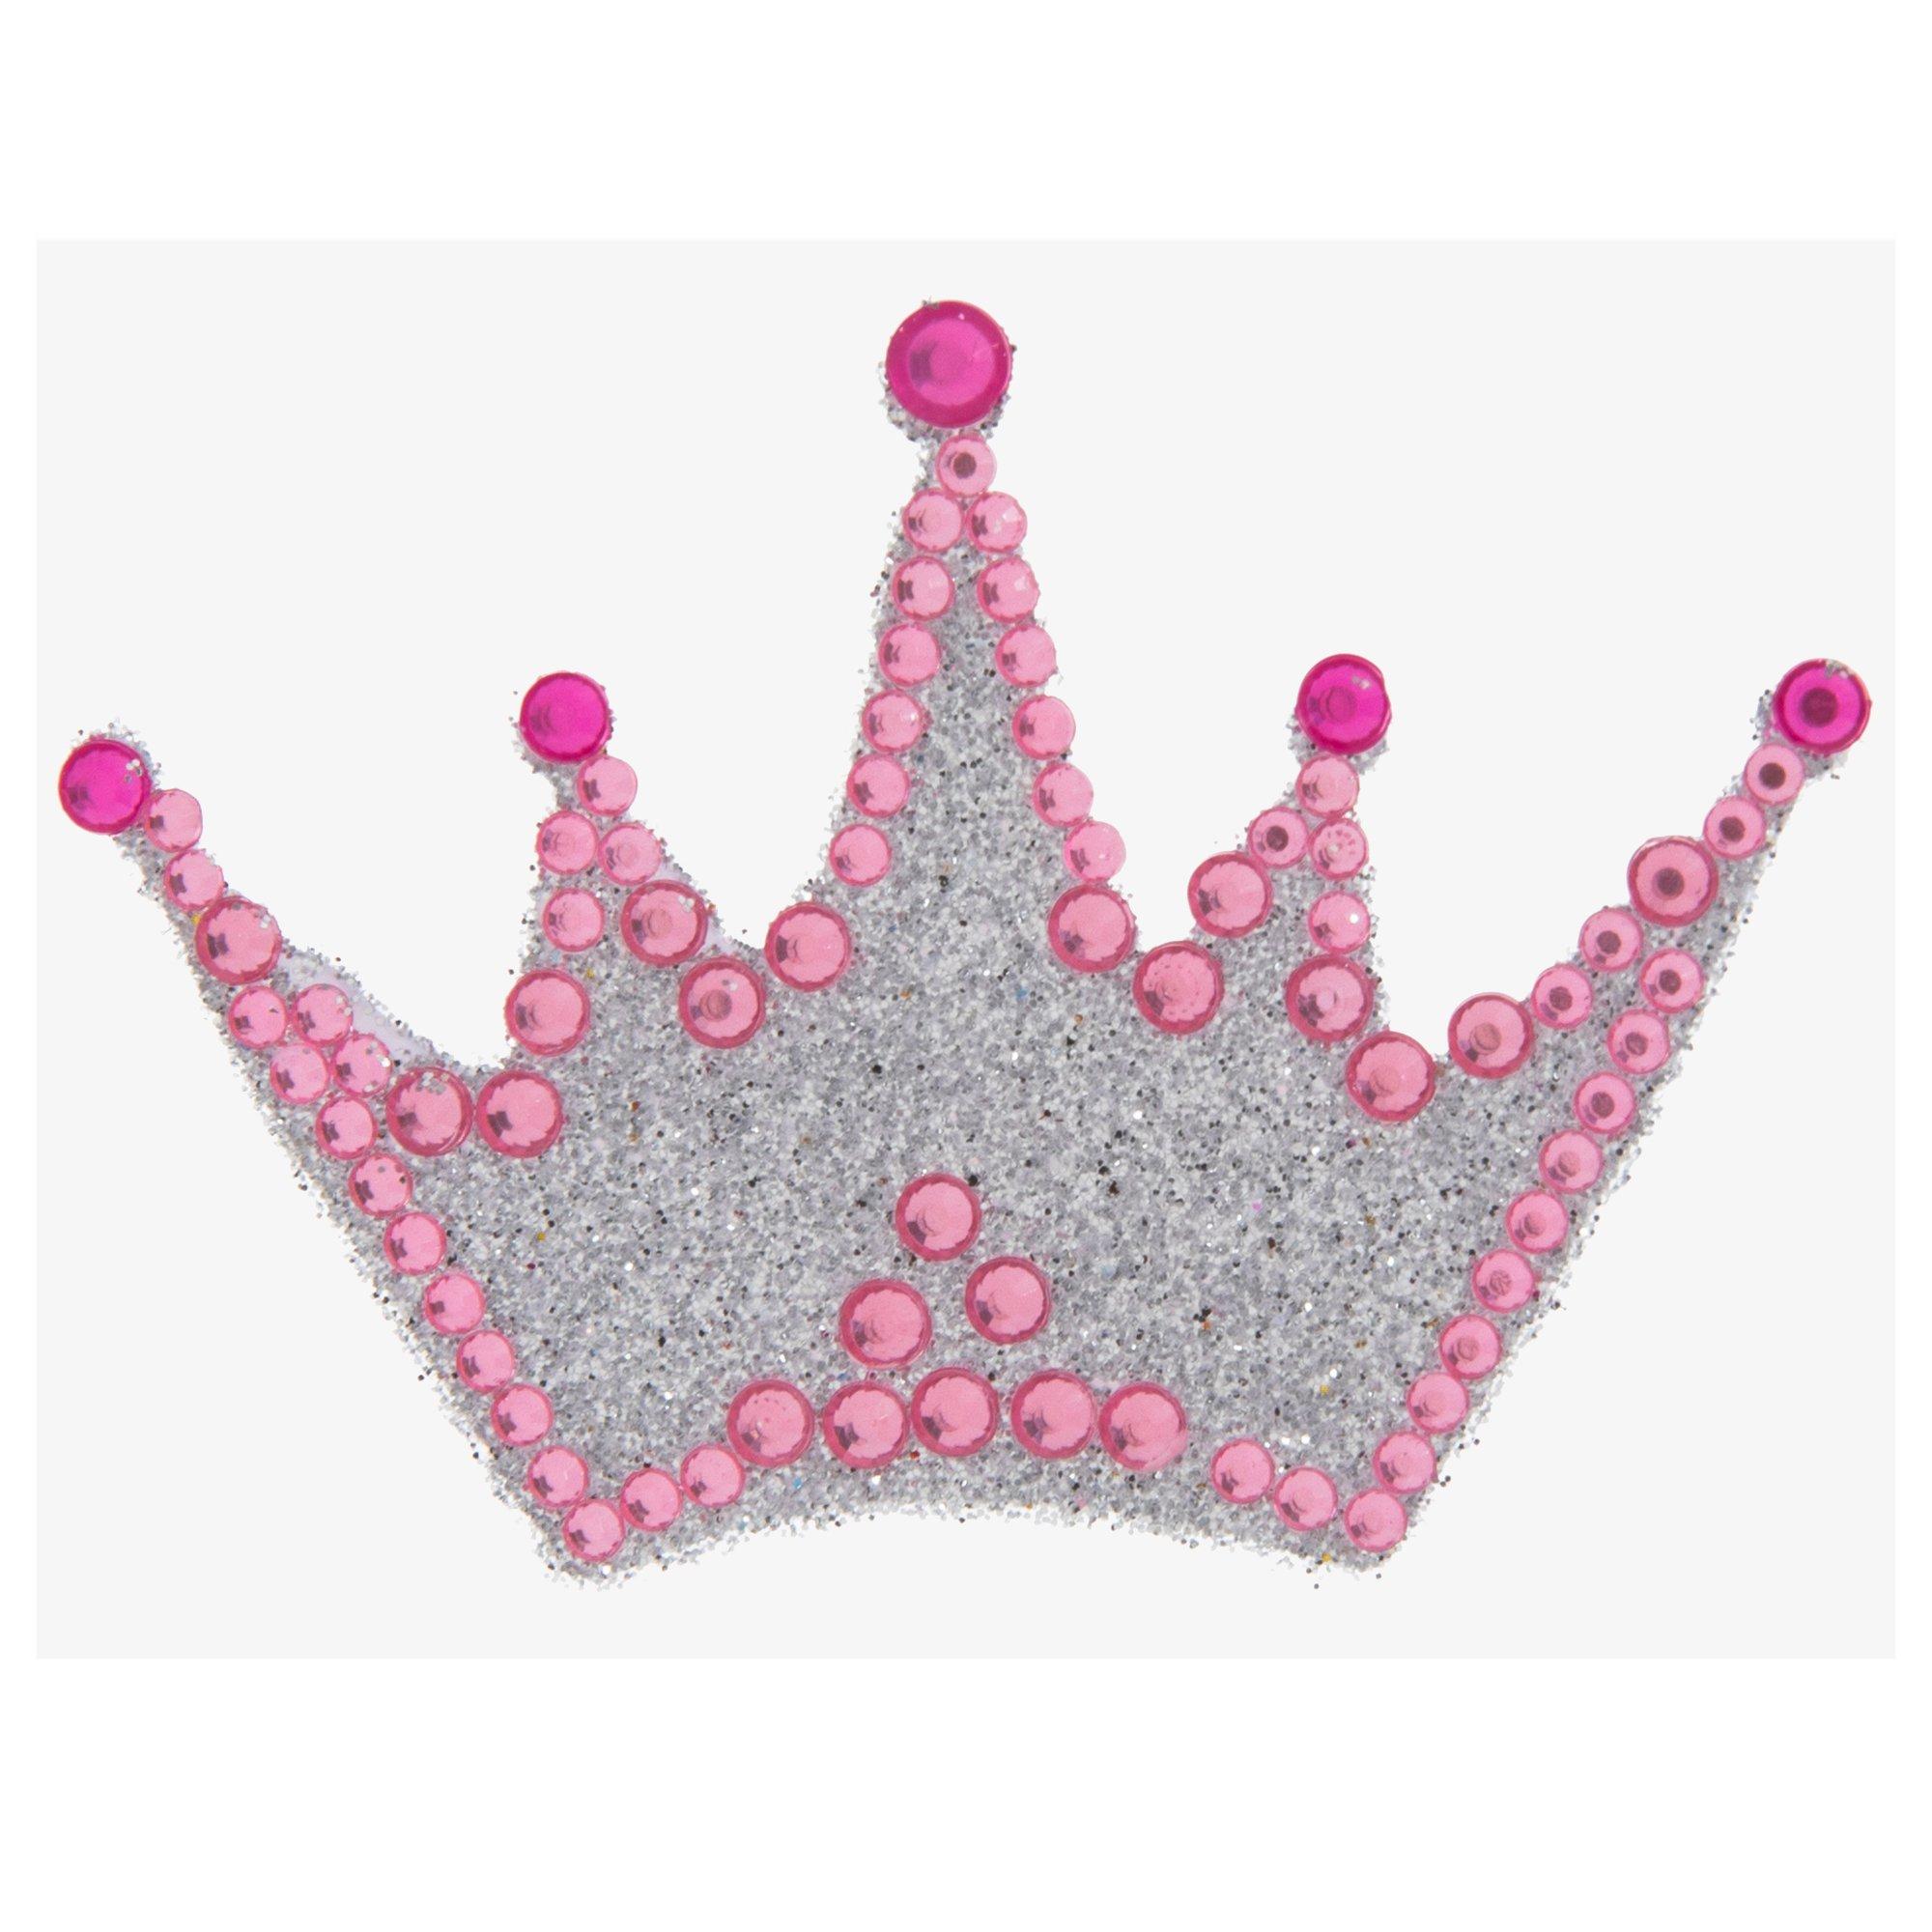 Craft Stickers Paper Studio Rhinestones Gems Pink Crowns Wands Stars Girl  Repeat